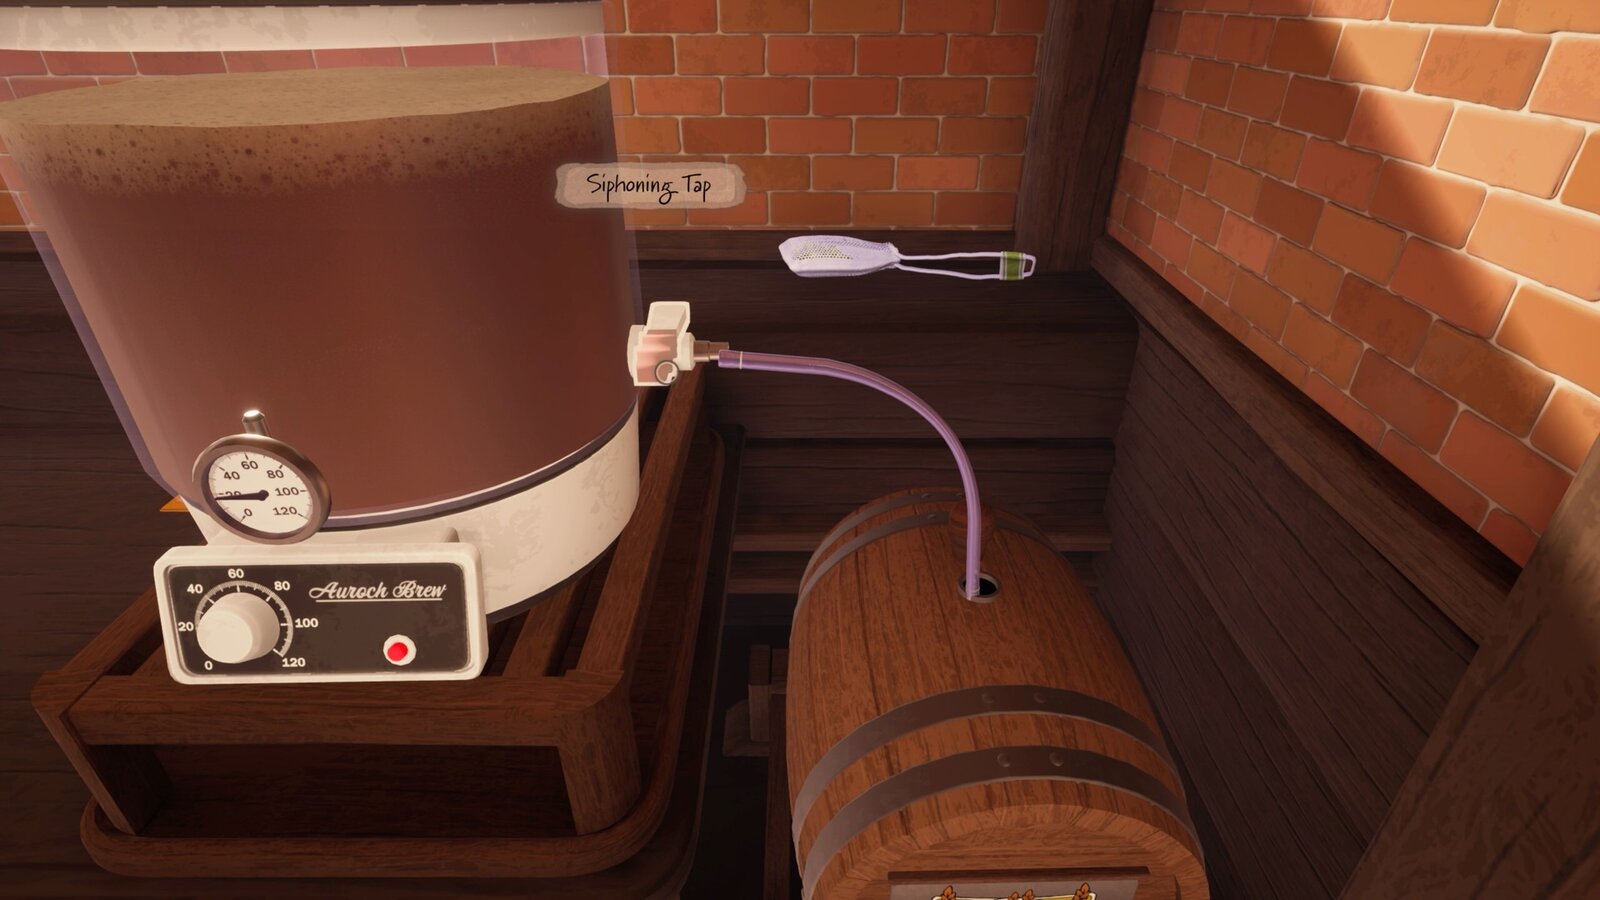 Brewmaster: Beer Brewing Simulator